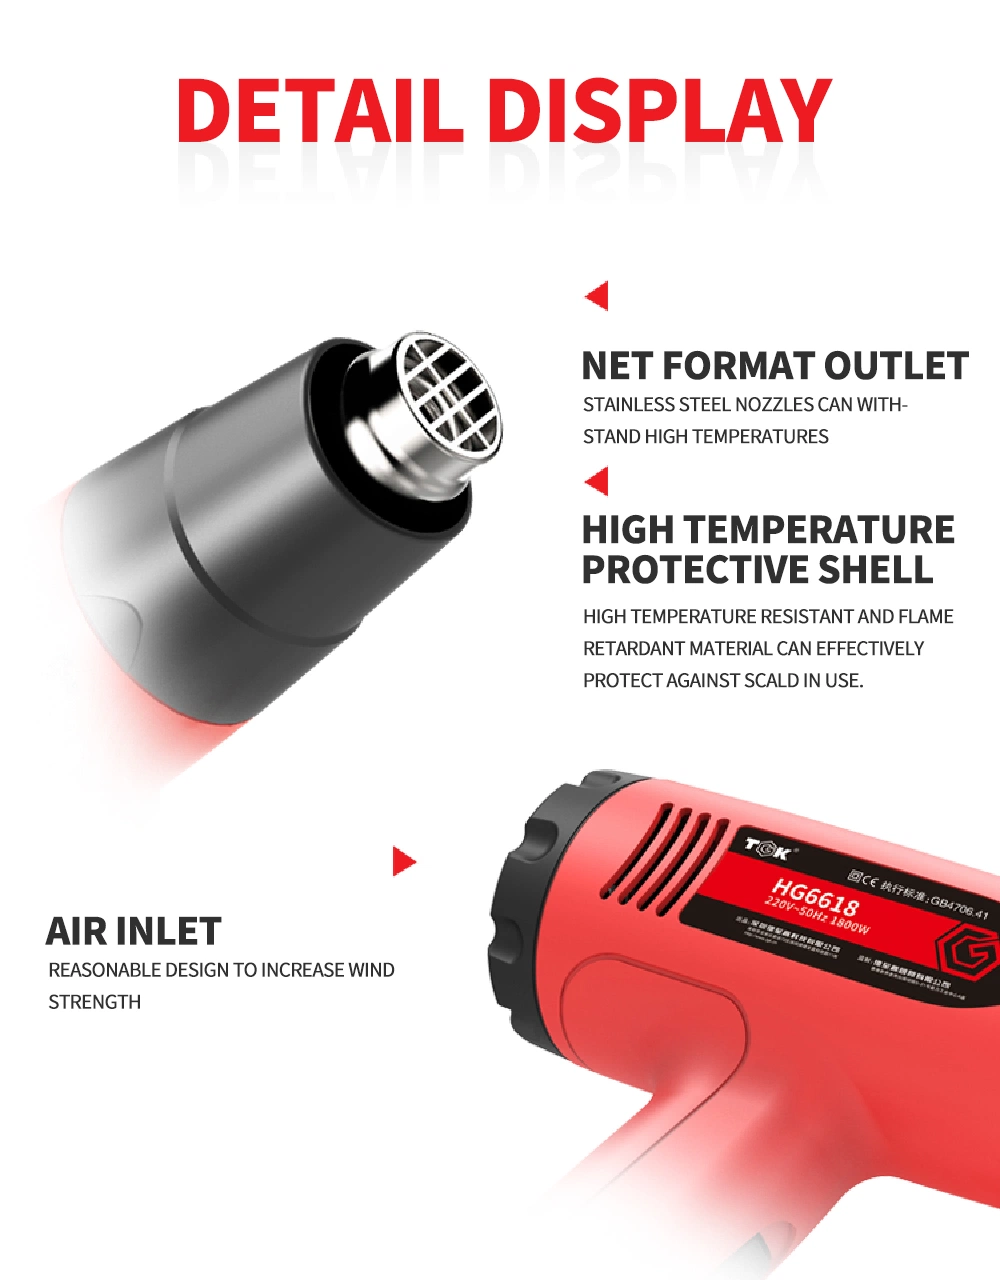 Portable Heat Gun for Vinyl on Coffee Mugs Hg6618